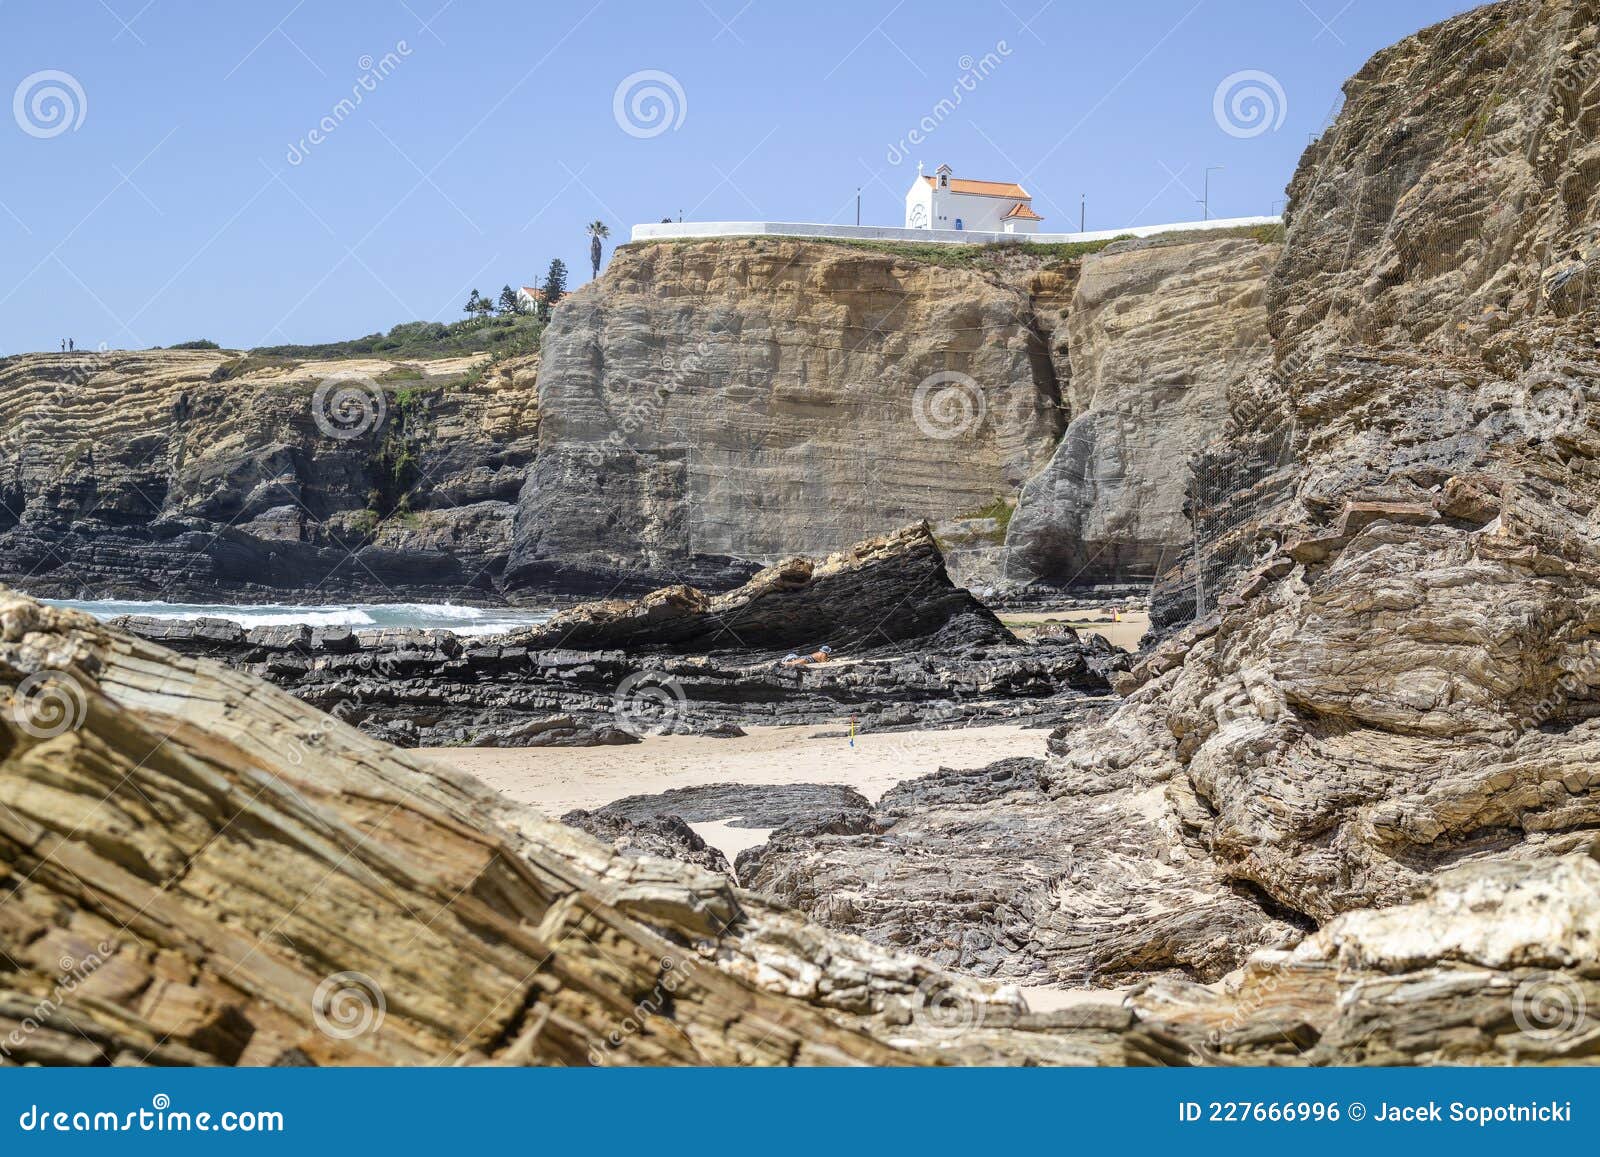 cliffy beach in zambujeira do mar, vincentina coast natural park, alentejo, portugal